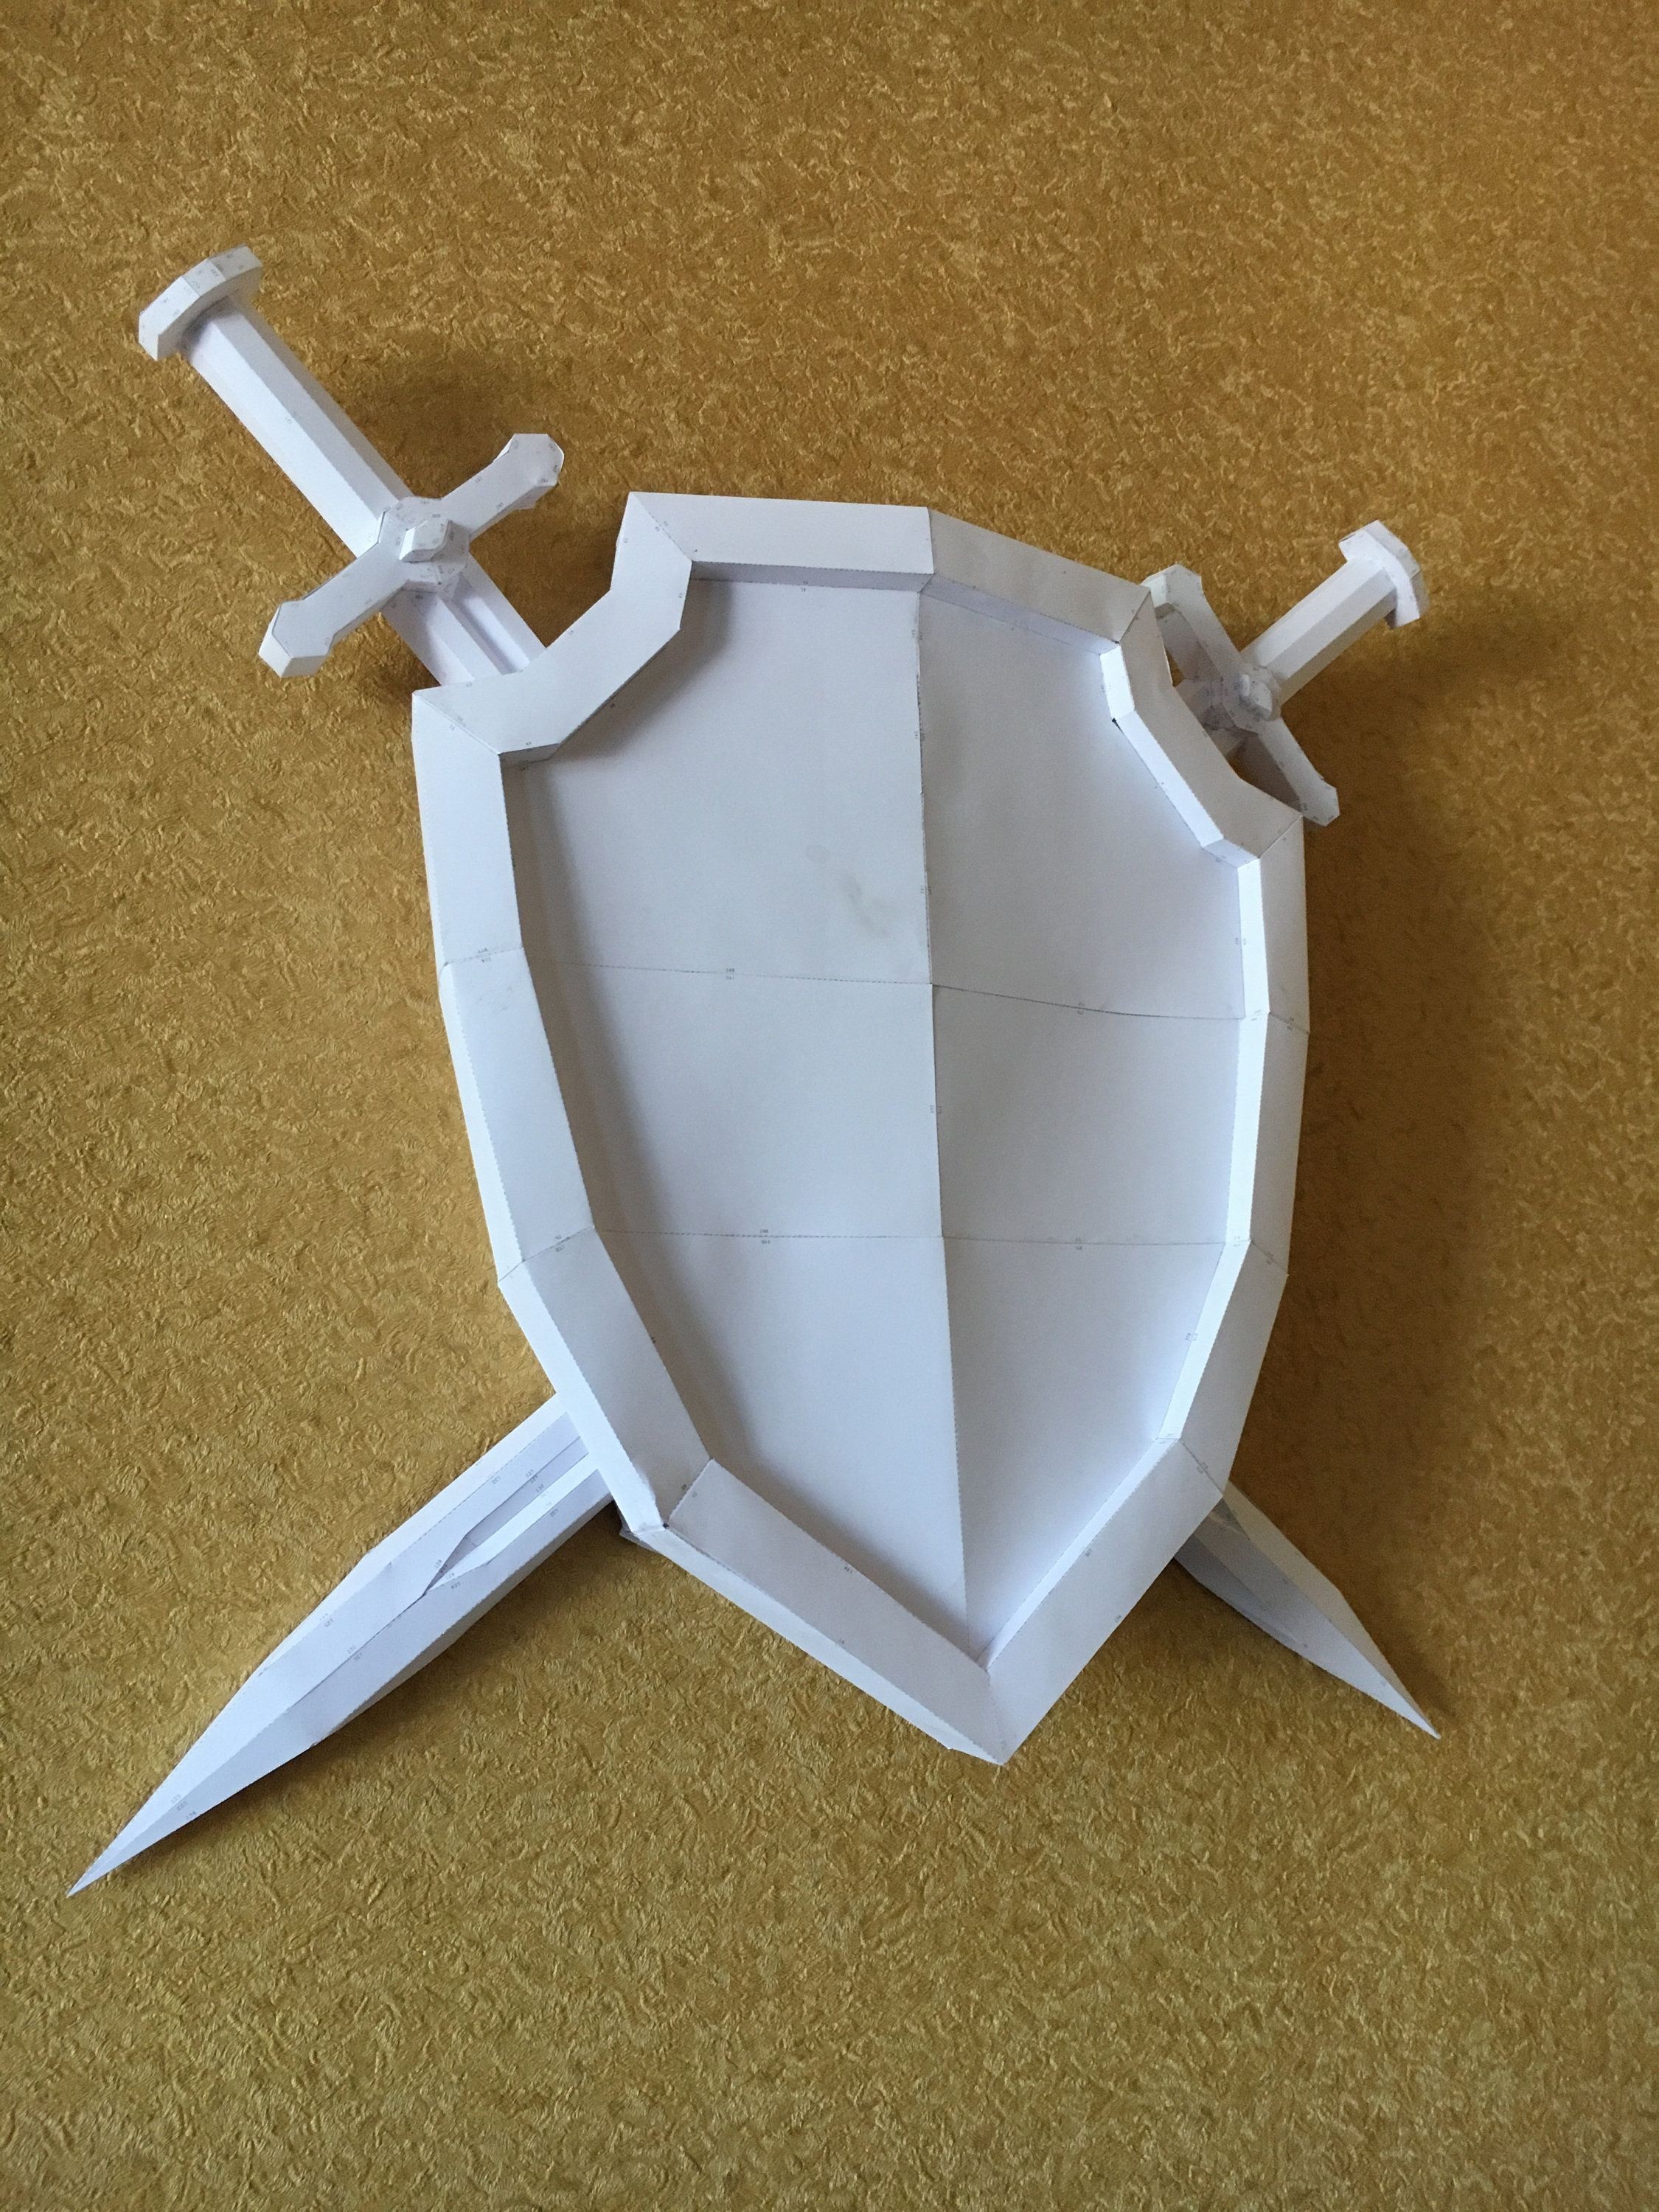 Papercraft Company Sword Shield Diy Papercraft Model ÐÑÐ¼Ð°Ð¶Ð½ÑÐµ Ð¸Ð·Ð´ÐµÐ Ð¸Ñ